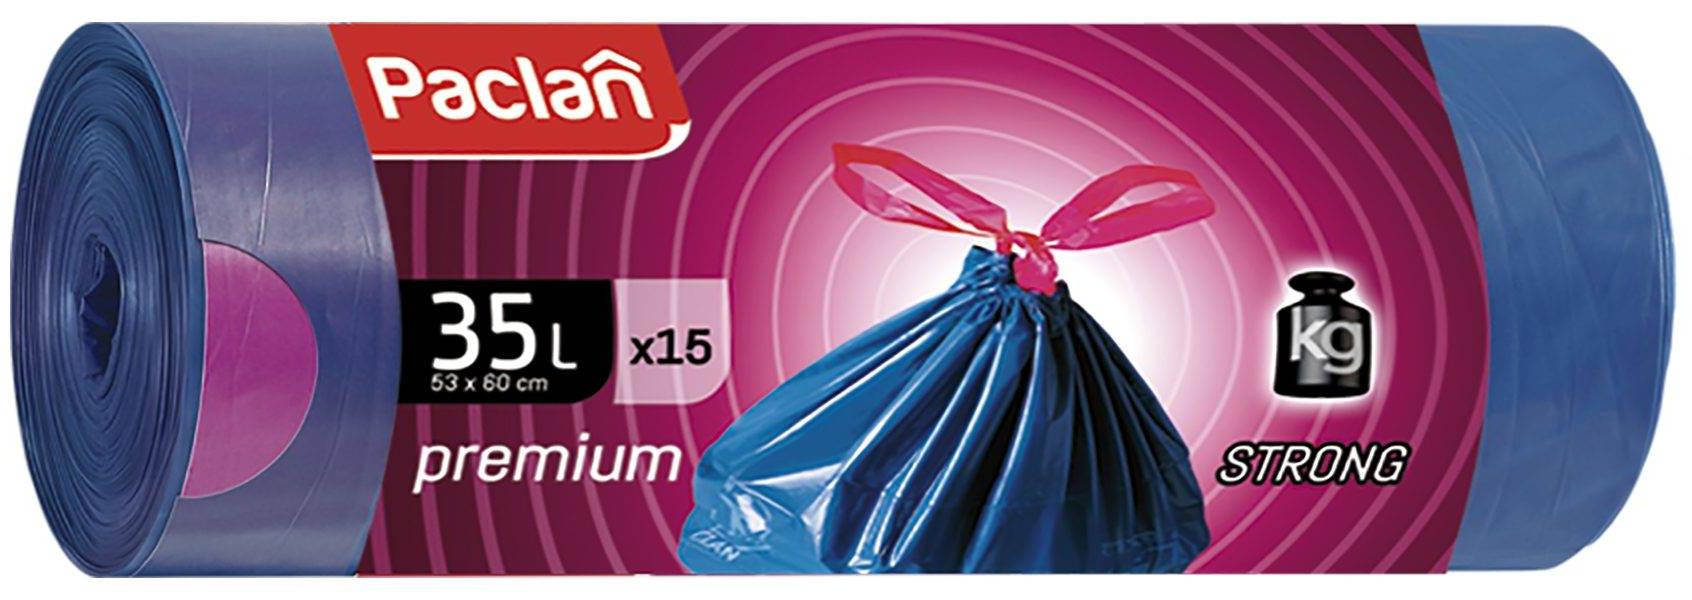 Paclan Мешки для мусора с тесьмой Premium 53*60 см 35л 15 шт